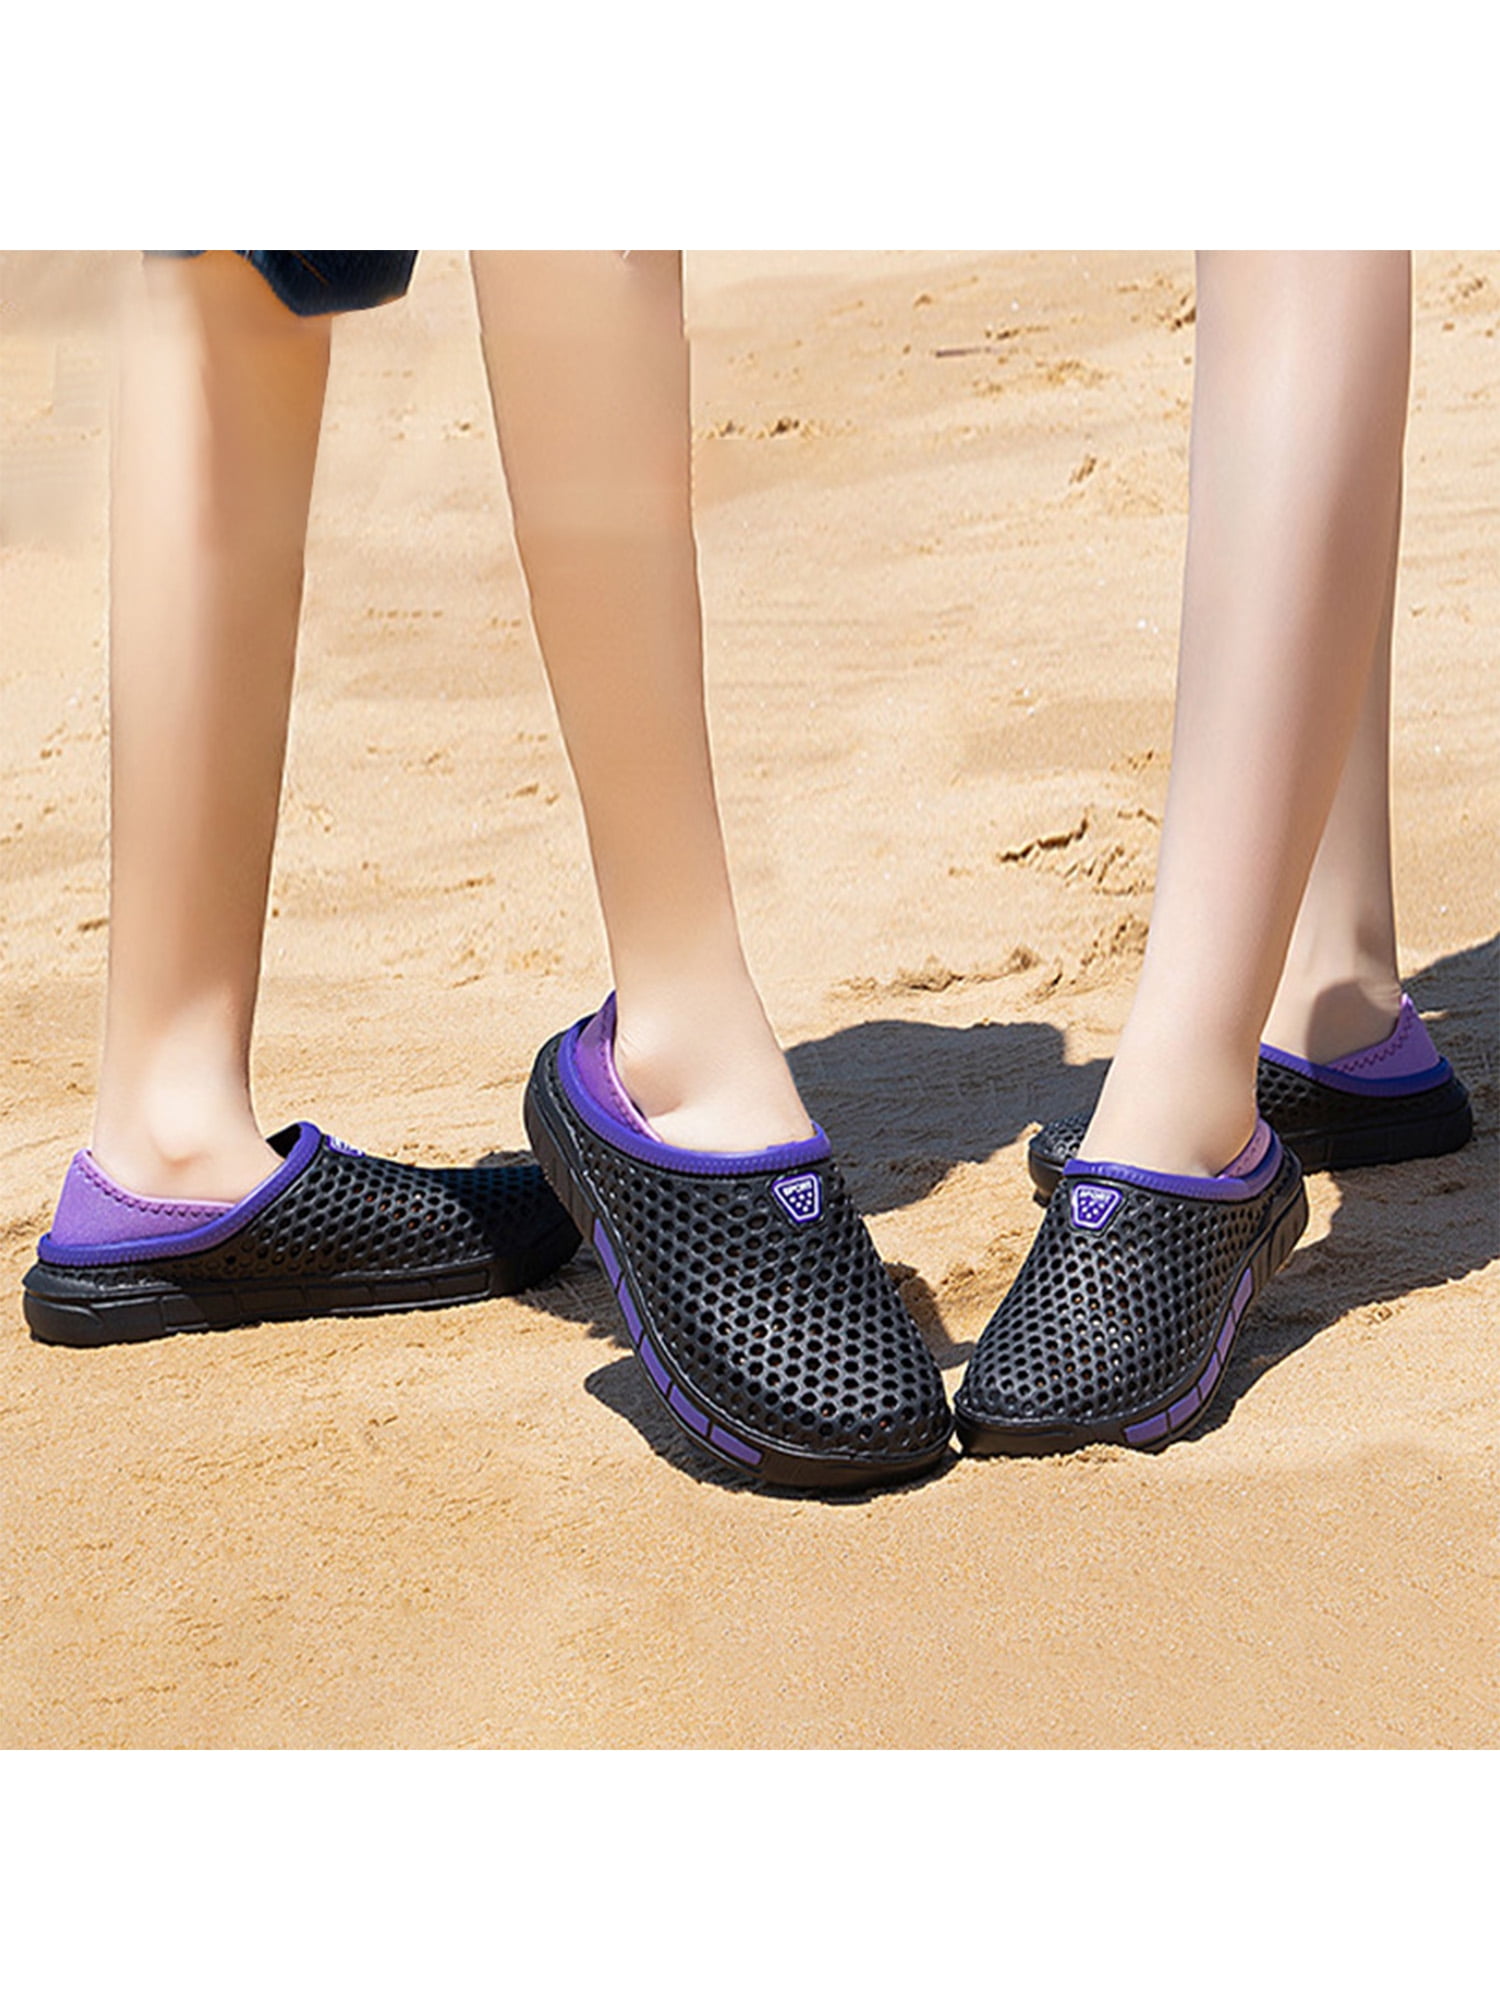 Summer Mens Fip Flops Sandals Slipper Backless Flats Slip on Casaul Shoes Size 